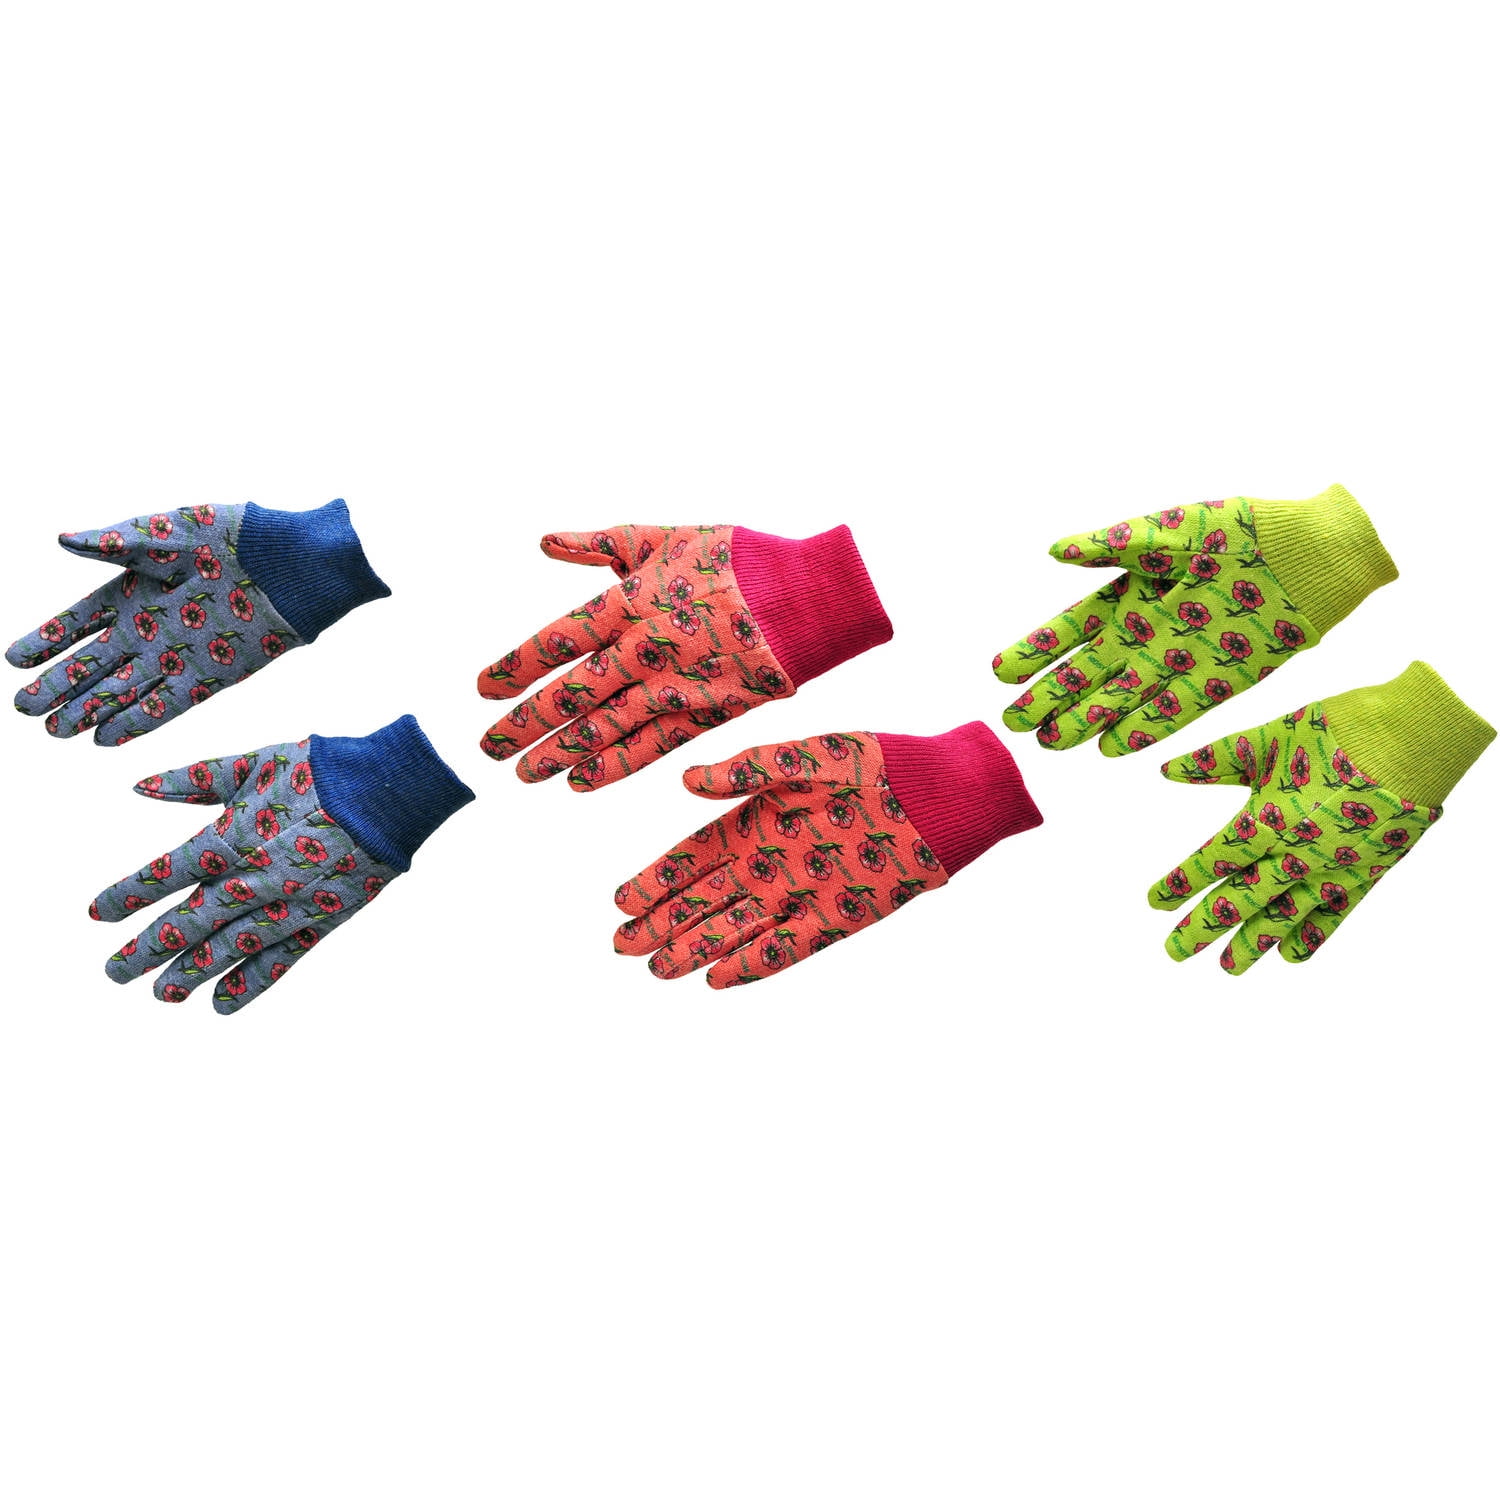 Briers Gardening Jersey Gloves Lightweight & Soft Rubber Grip 1 Pair Size Medium 